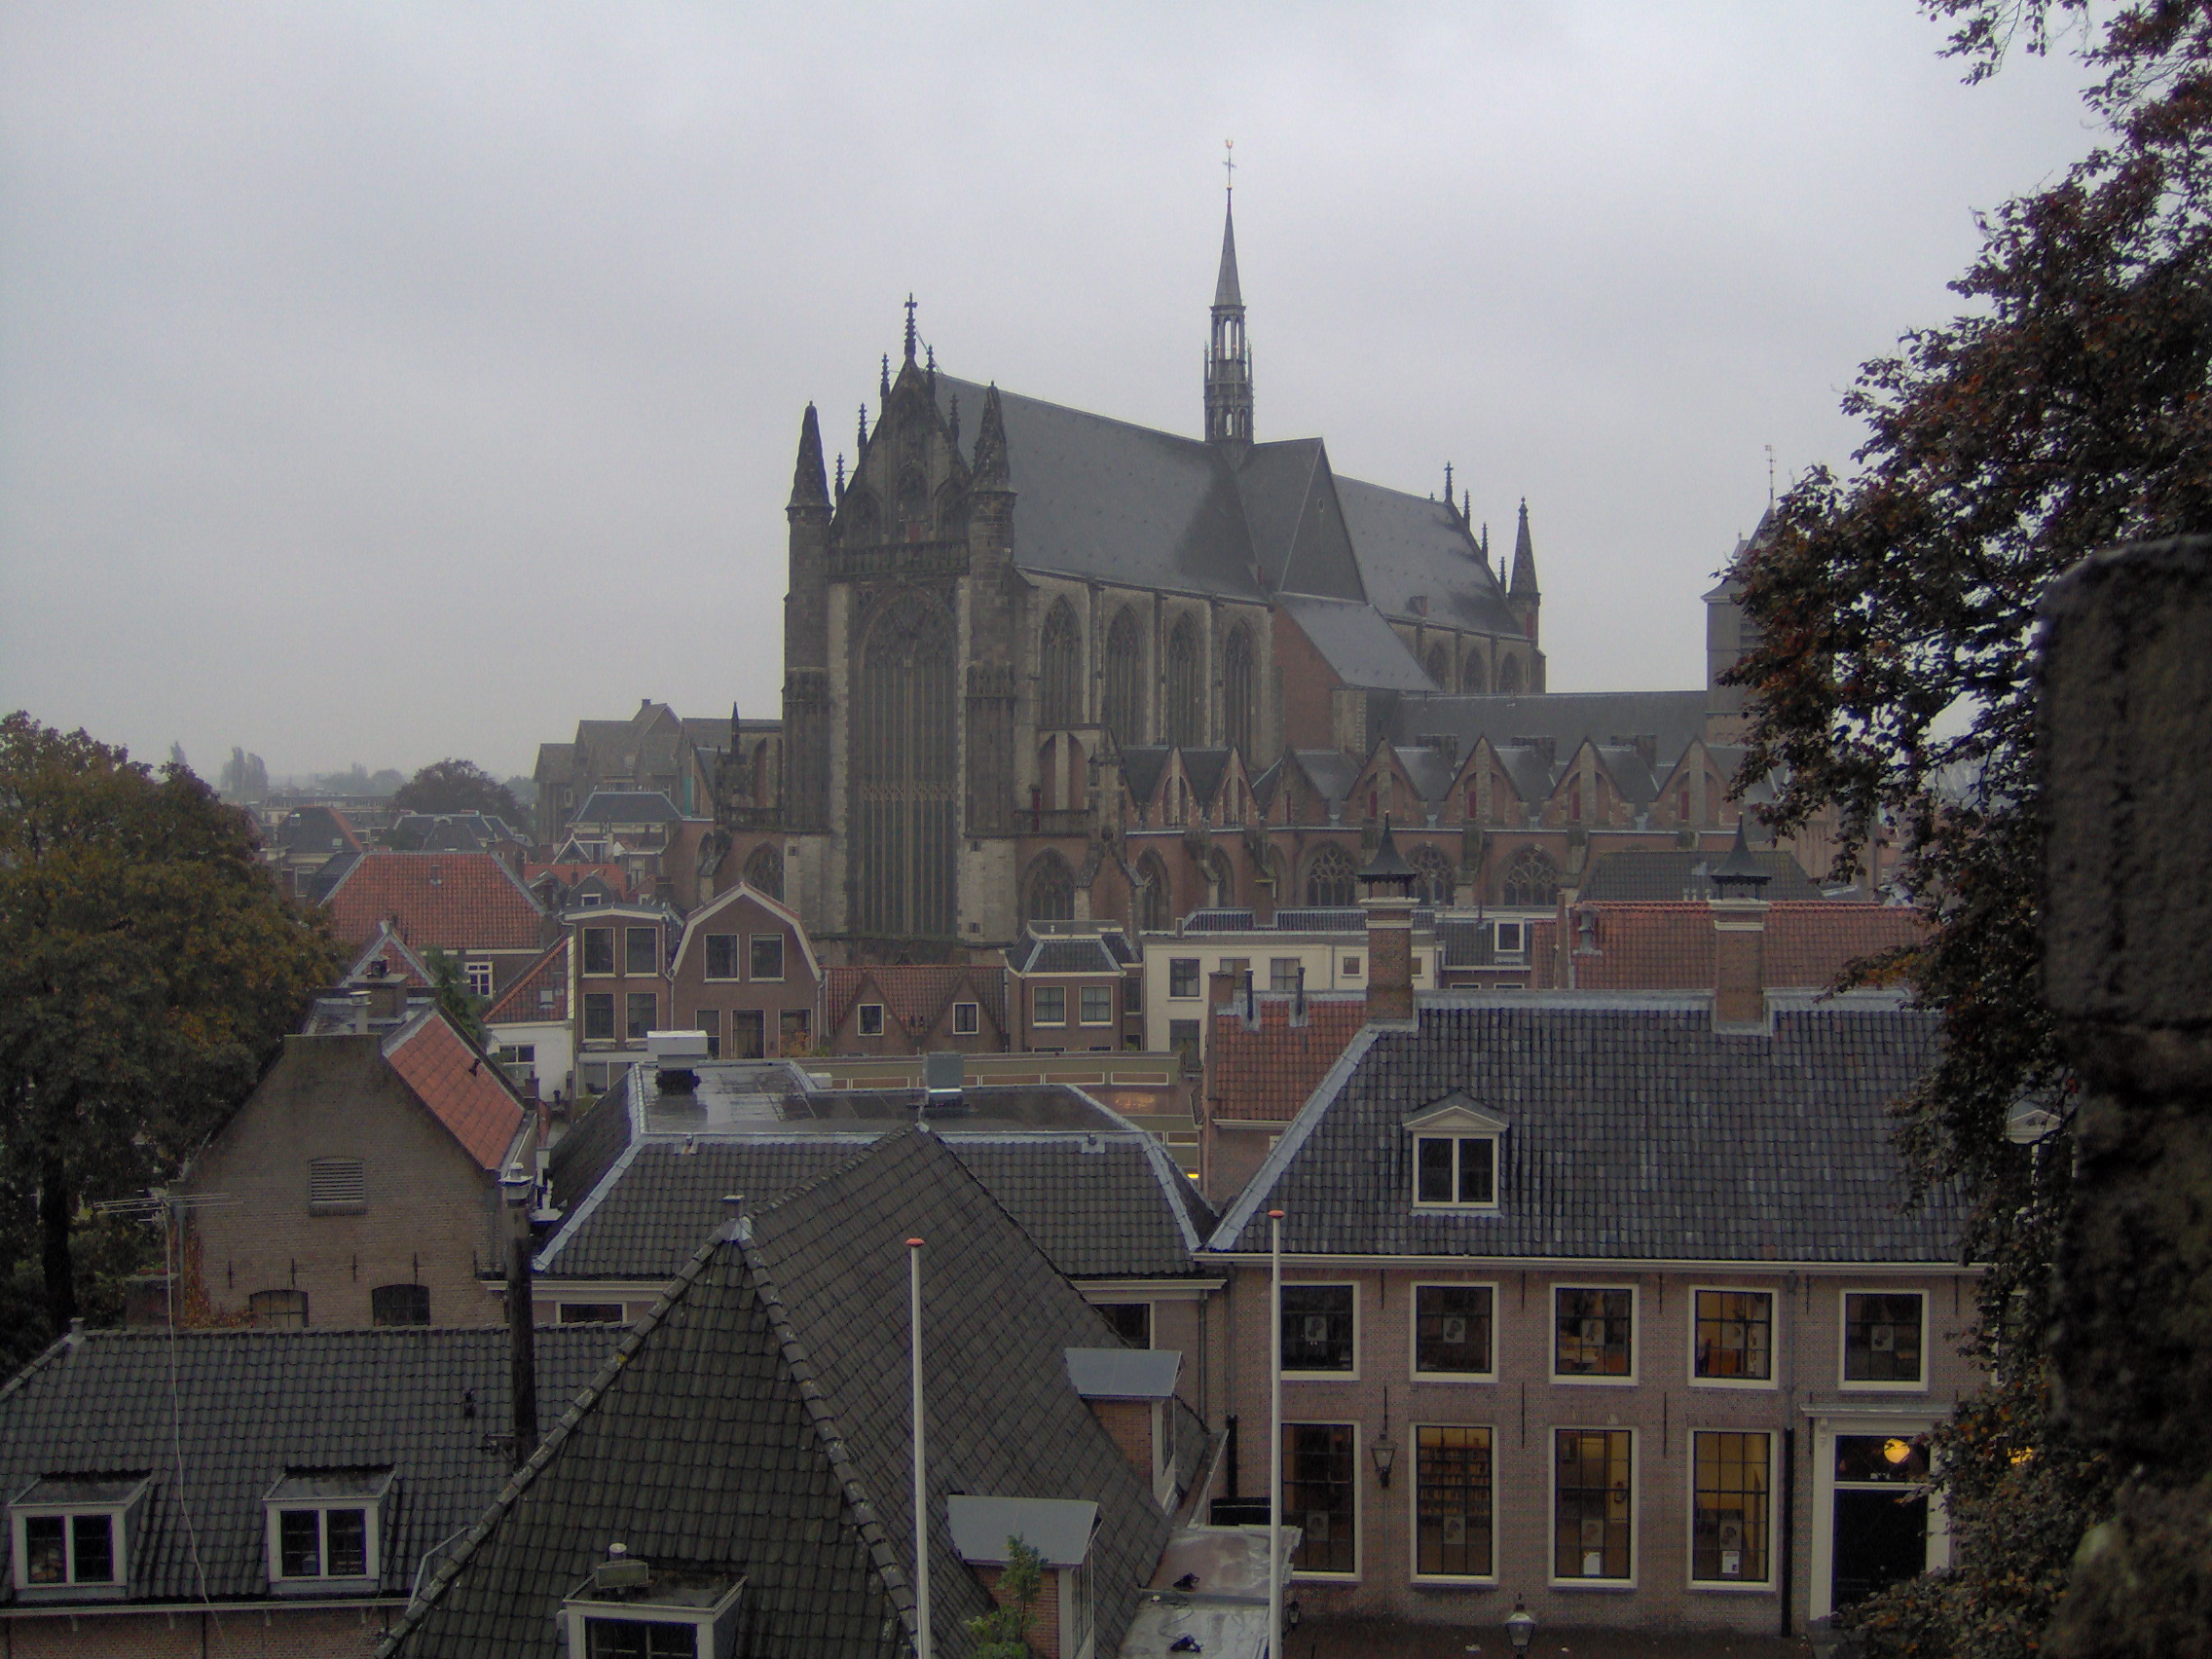 St. Peter’s Church (Pieterskirk) in Leiden